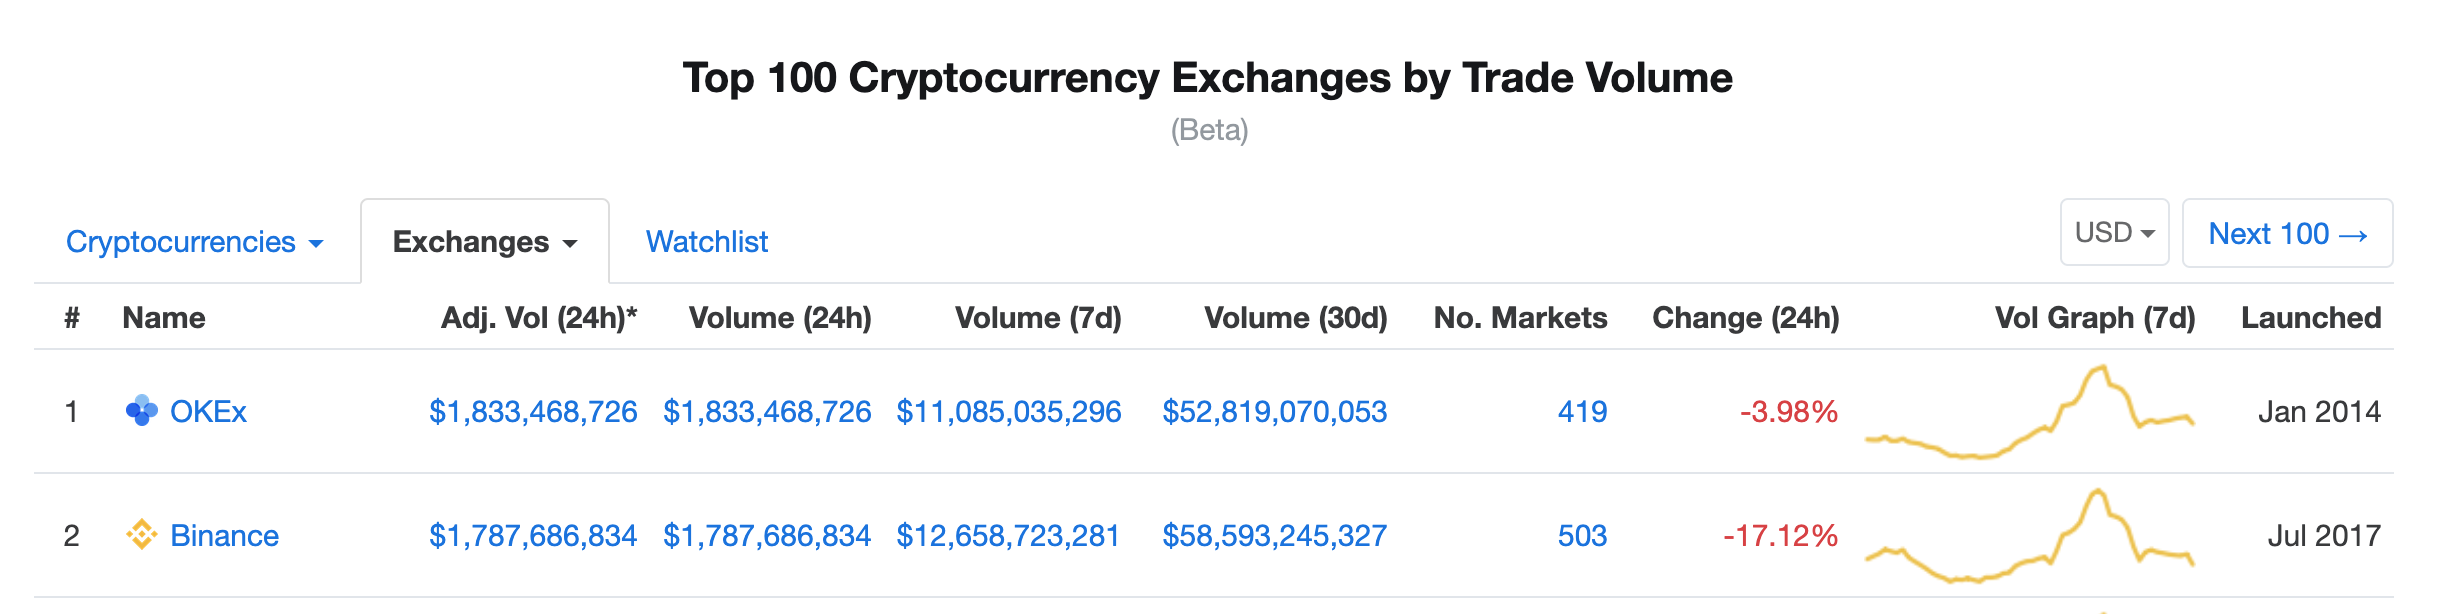 Top centralized exchange volume